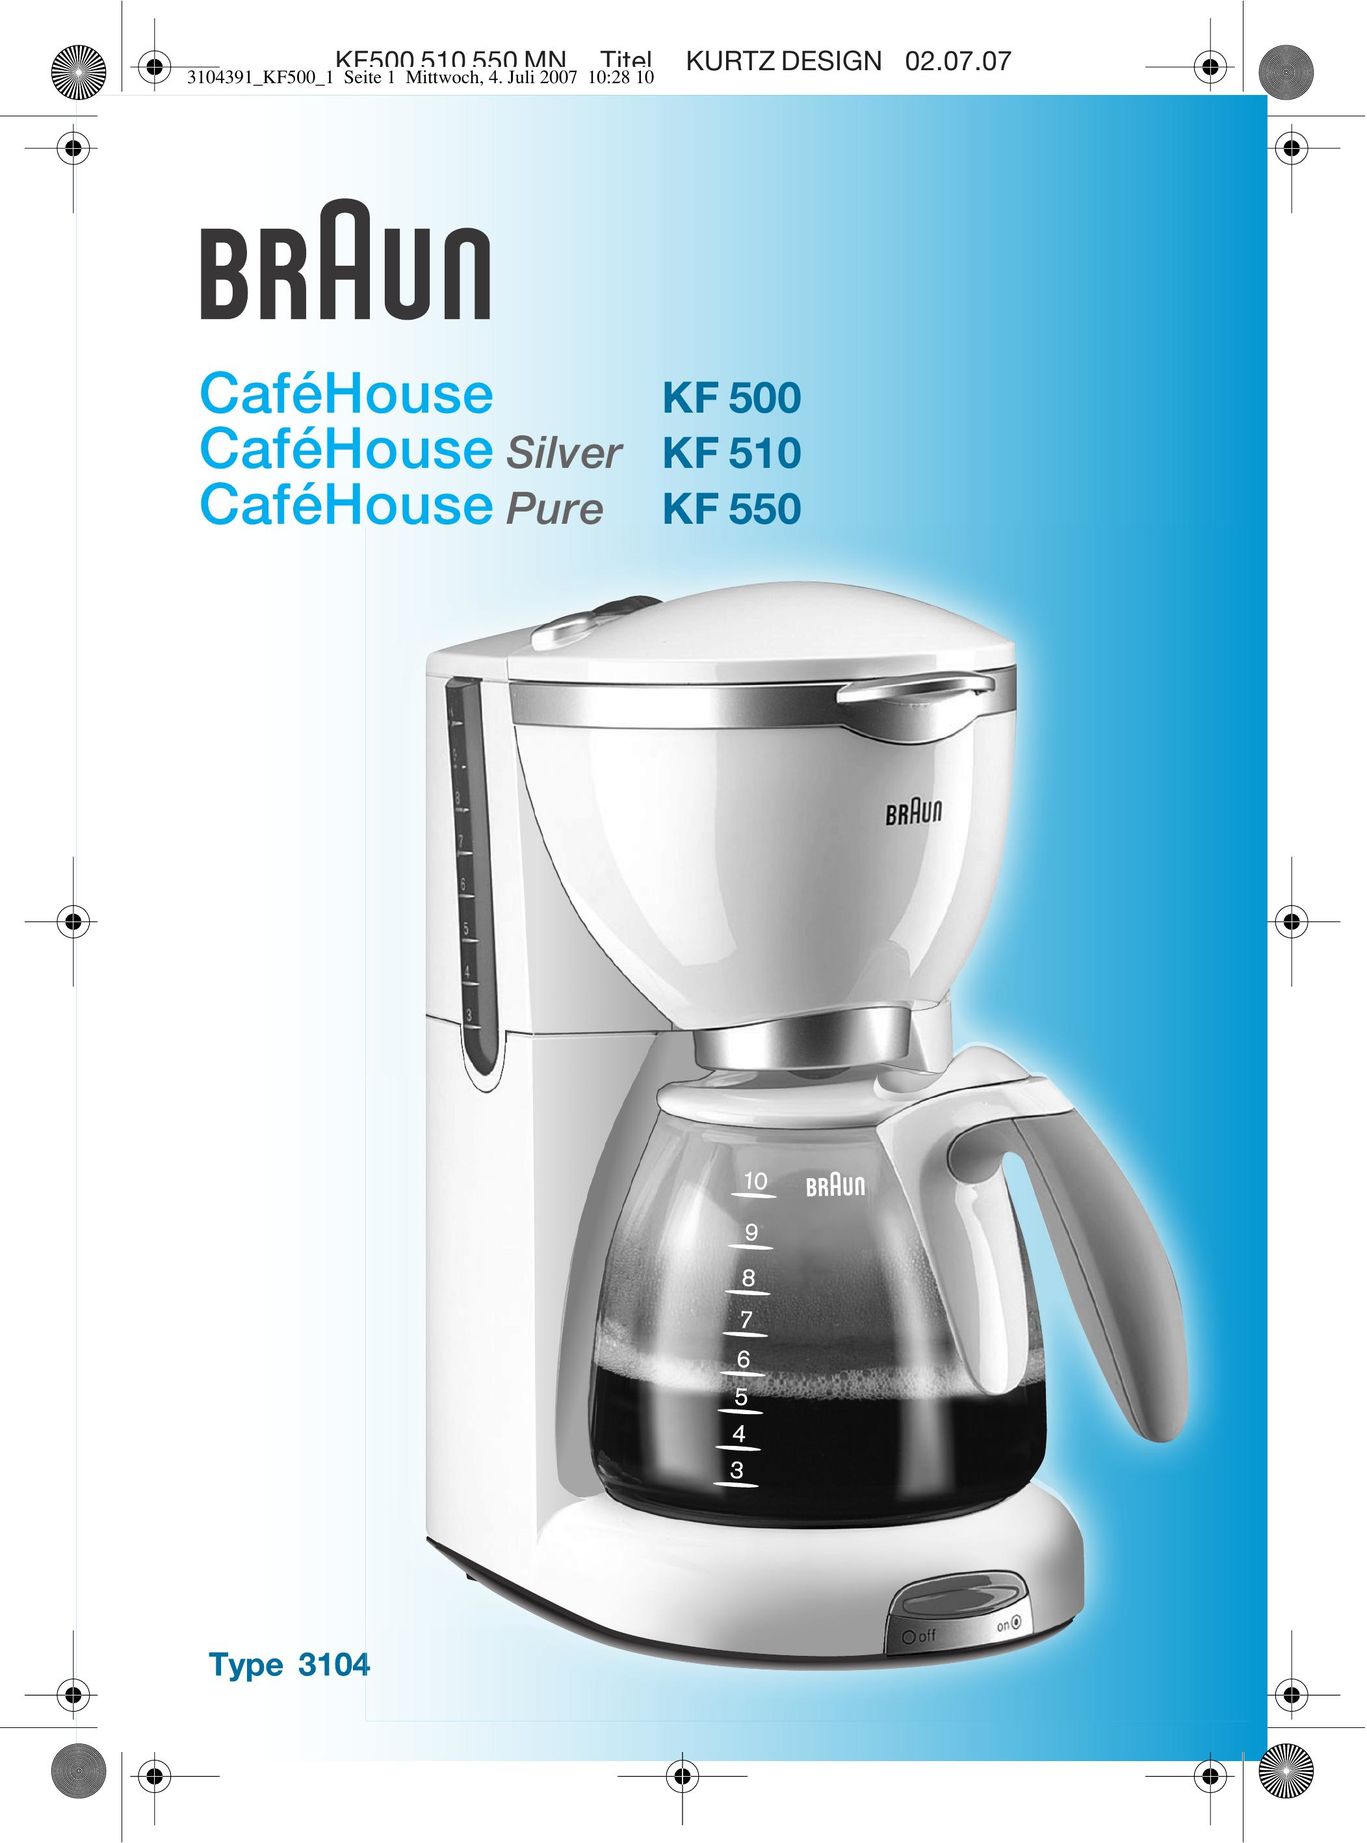 Braun CafHouse Silver KF 510 Coffeemaker User Manual